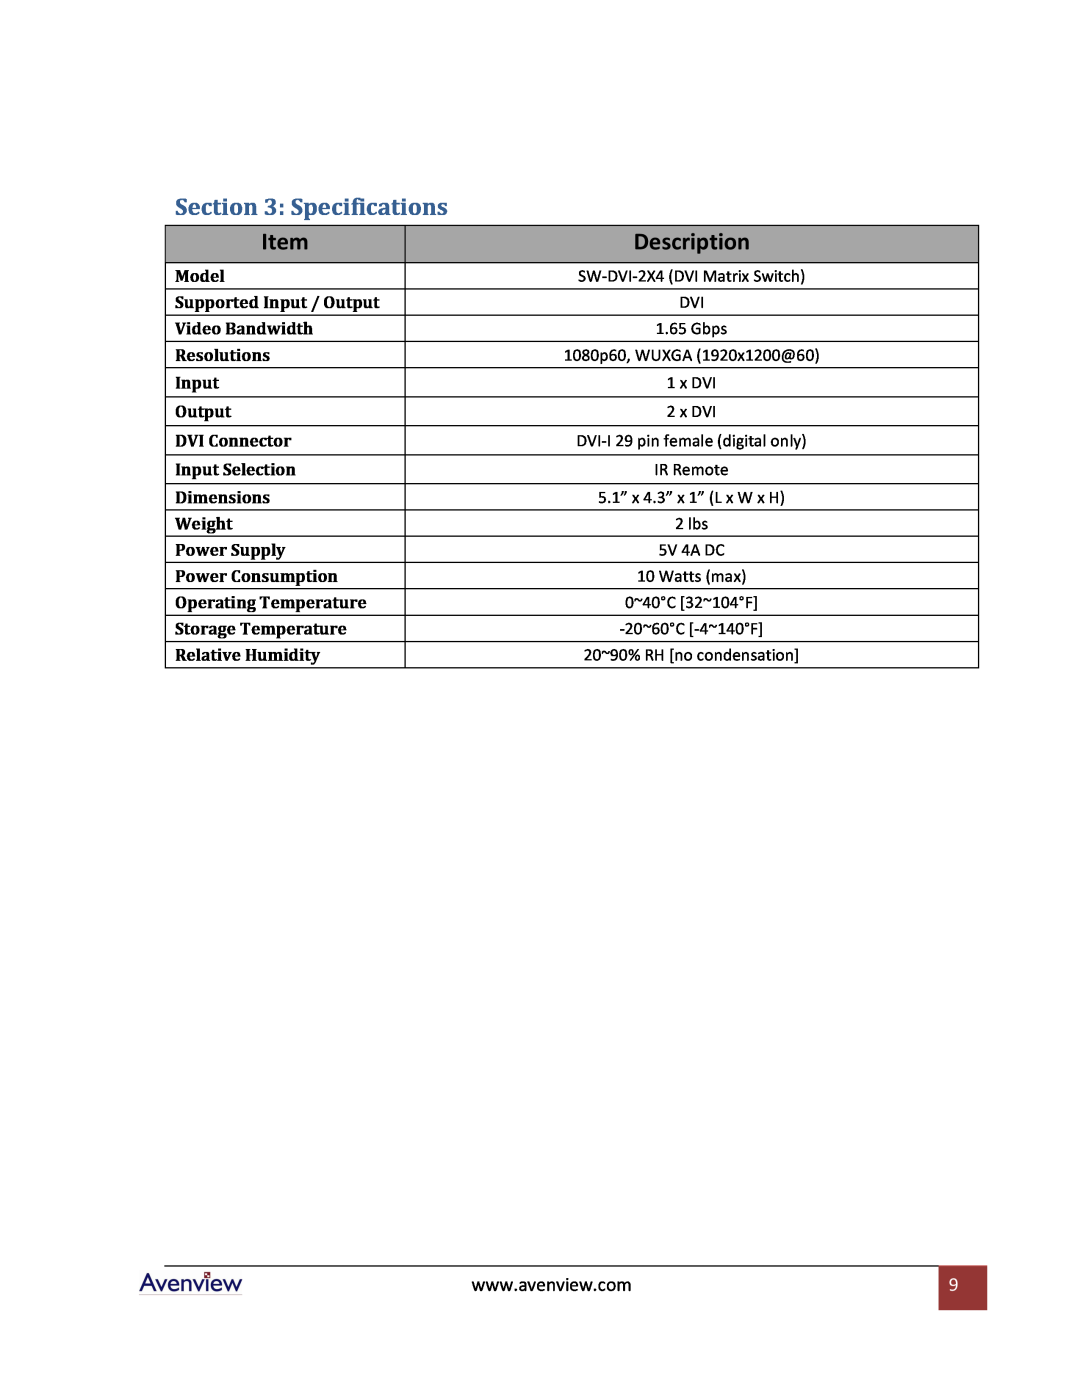 Avenview SW-DVI-2X4 specifications Specifications, Description 